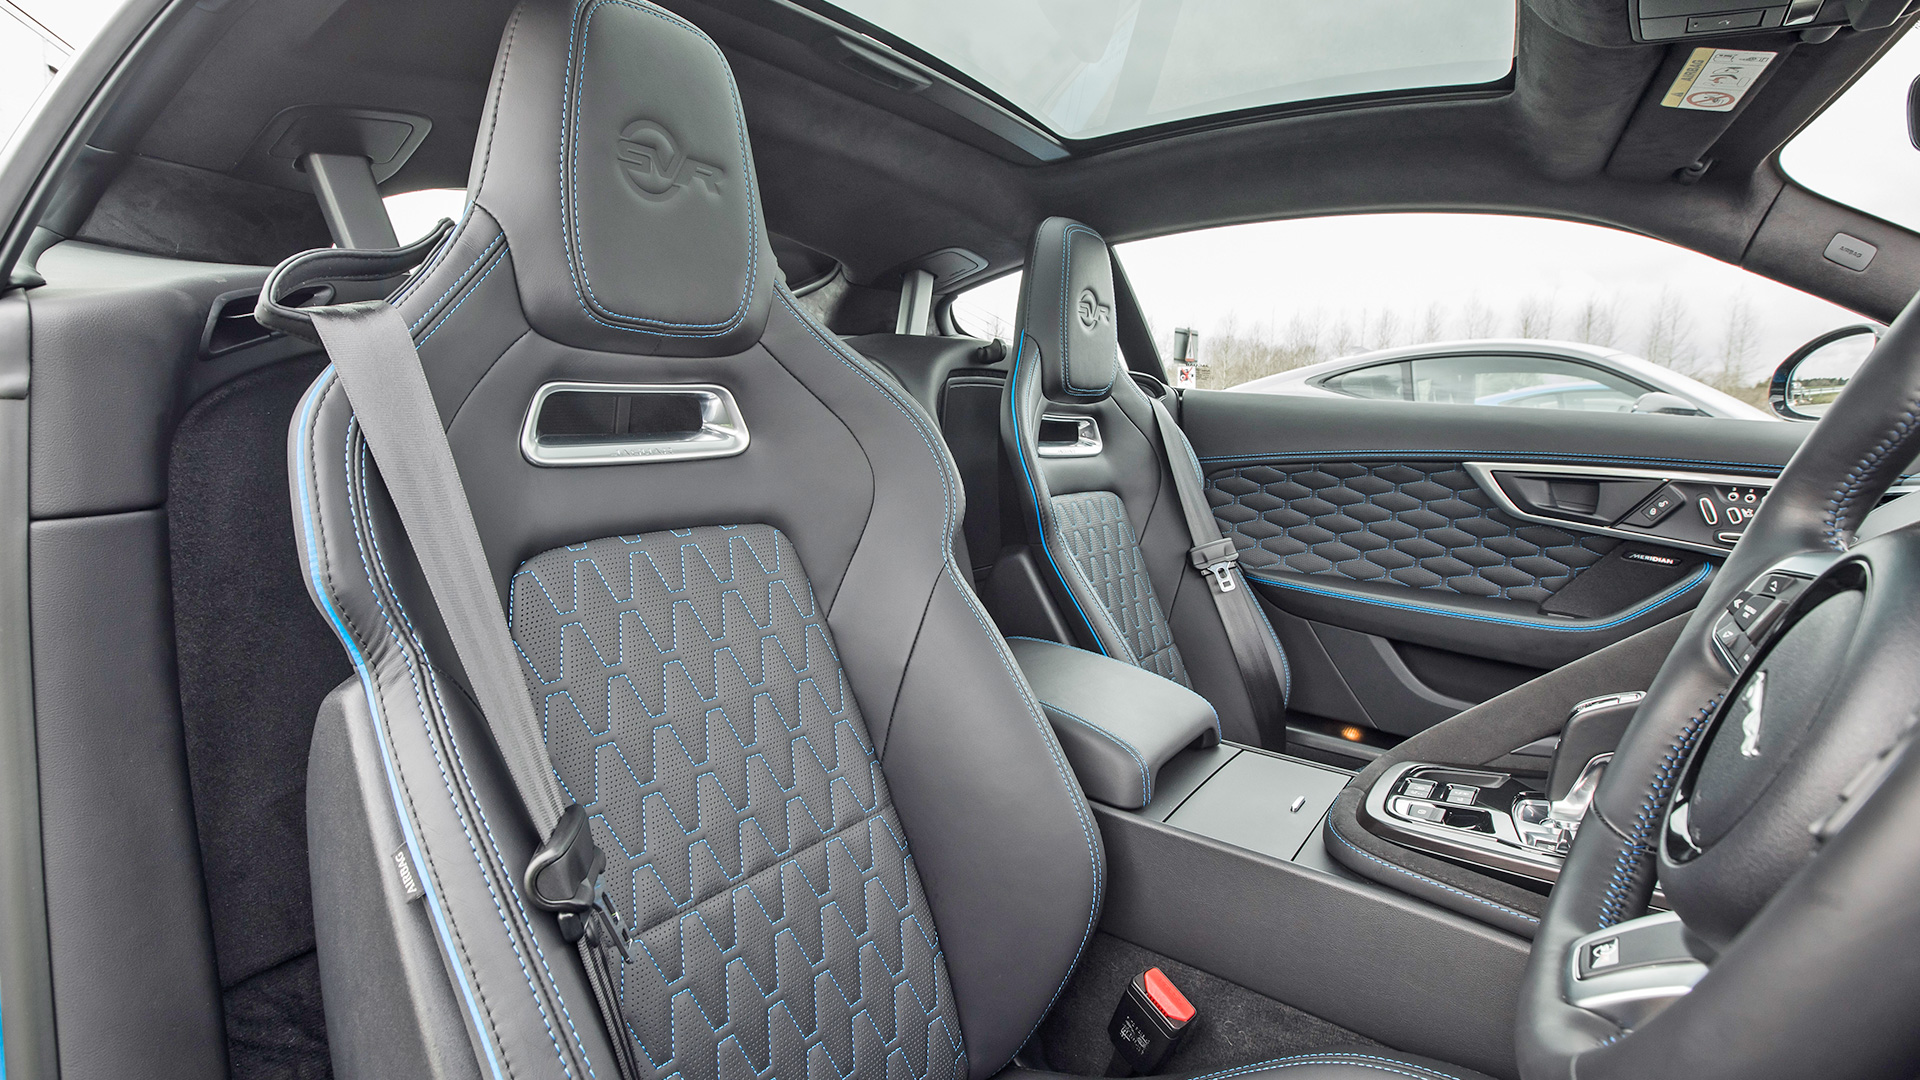 Jaguar F Type 2018 Svr Interior Car Photos Overdrive